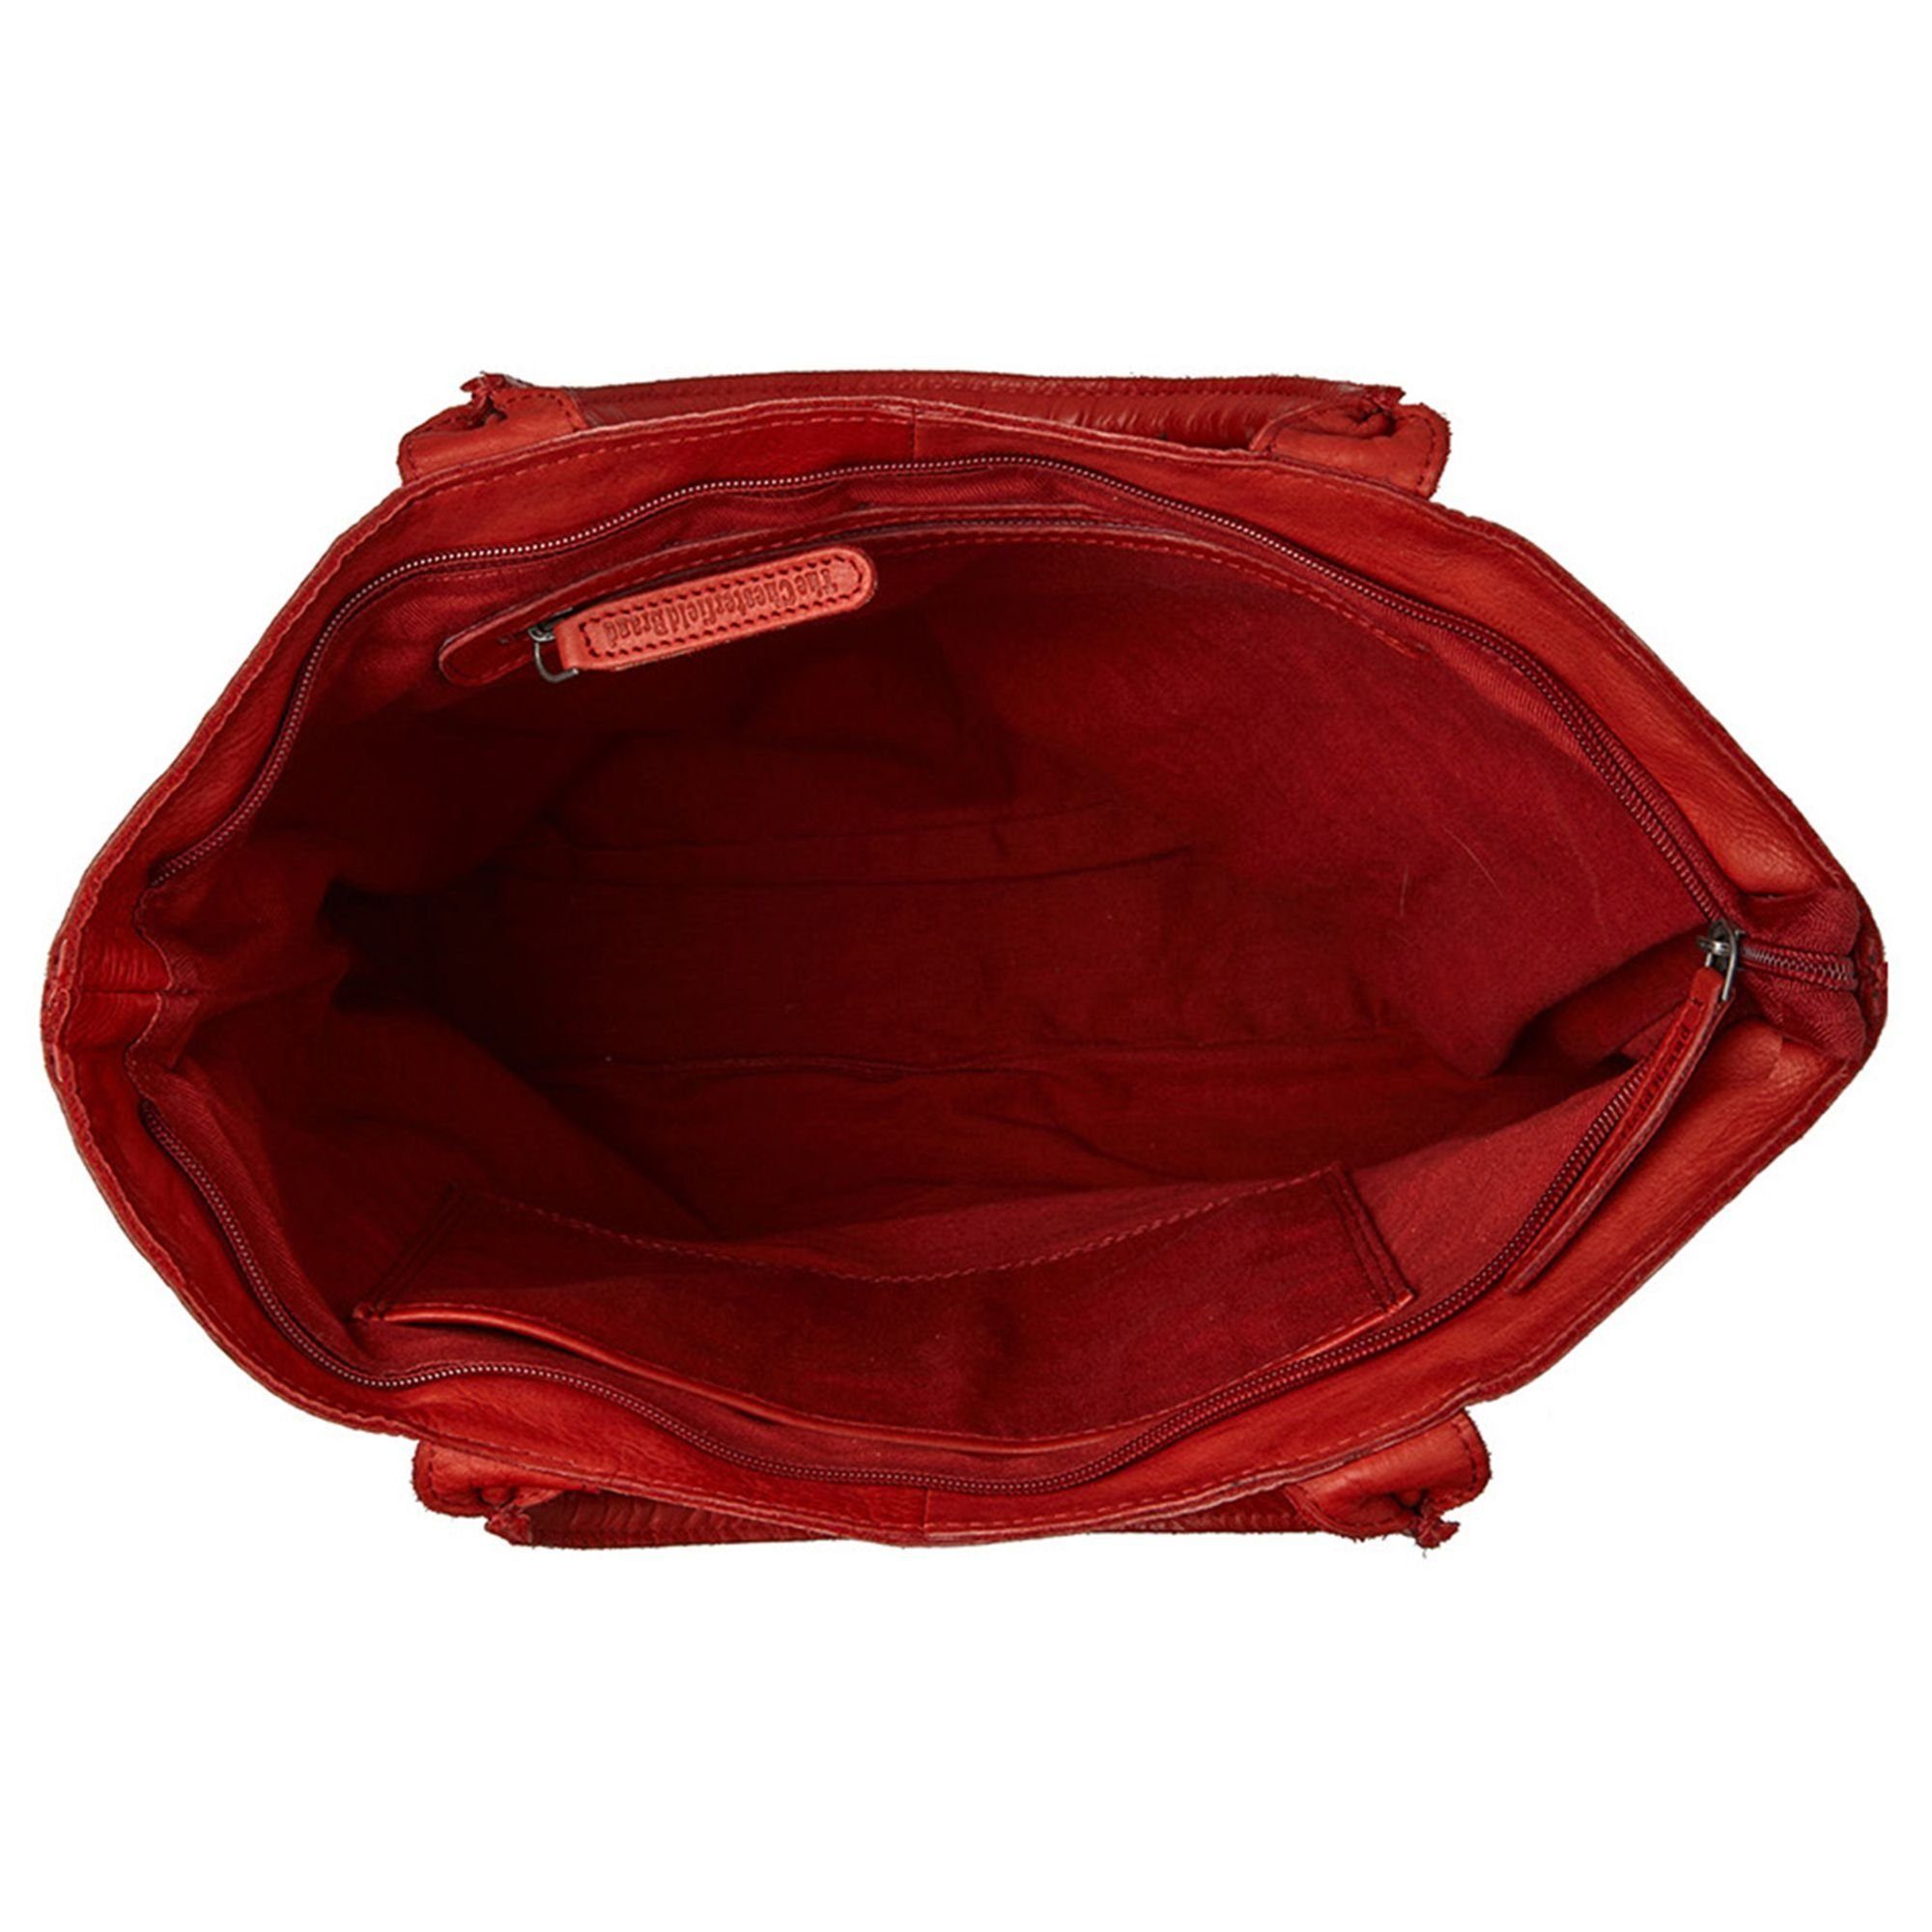 The Henkeltasche, Chesterfield Brand Leder red